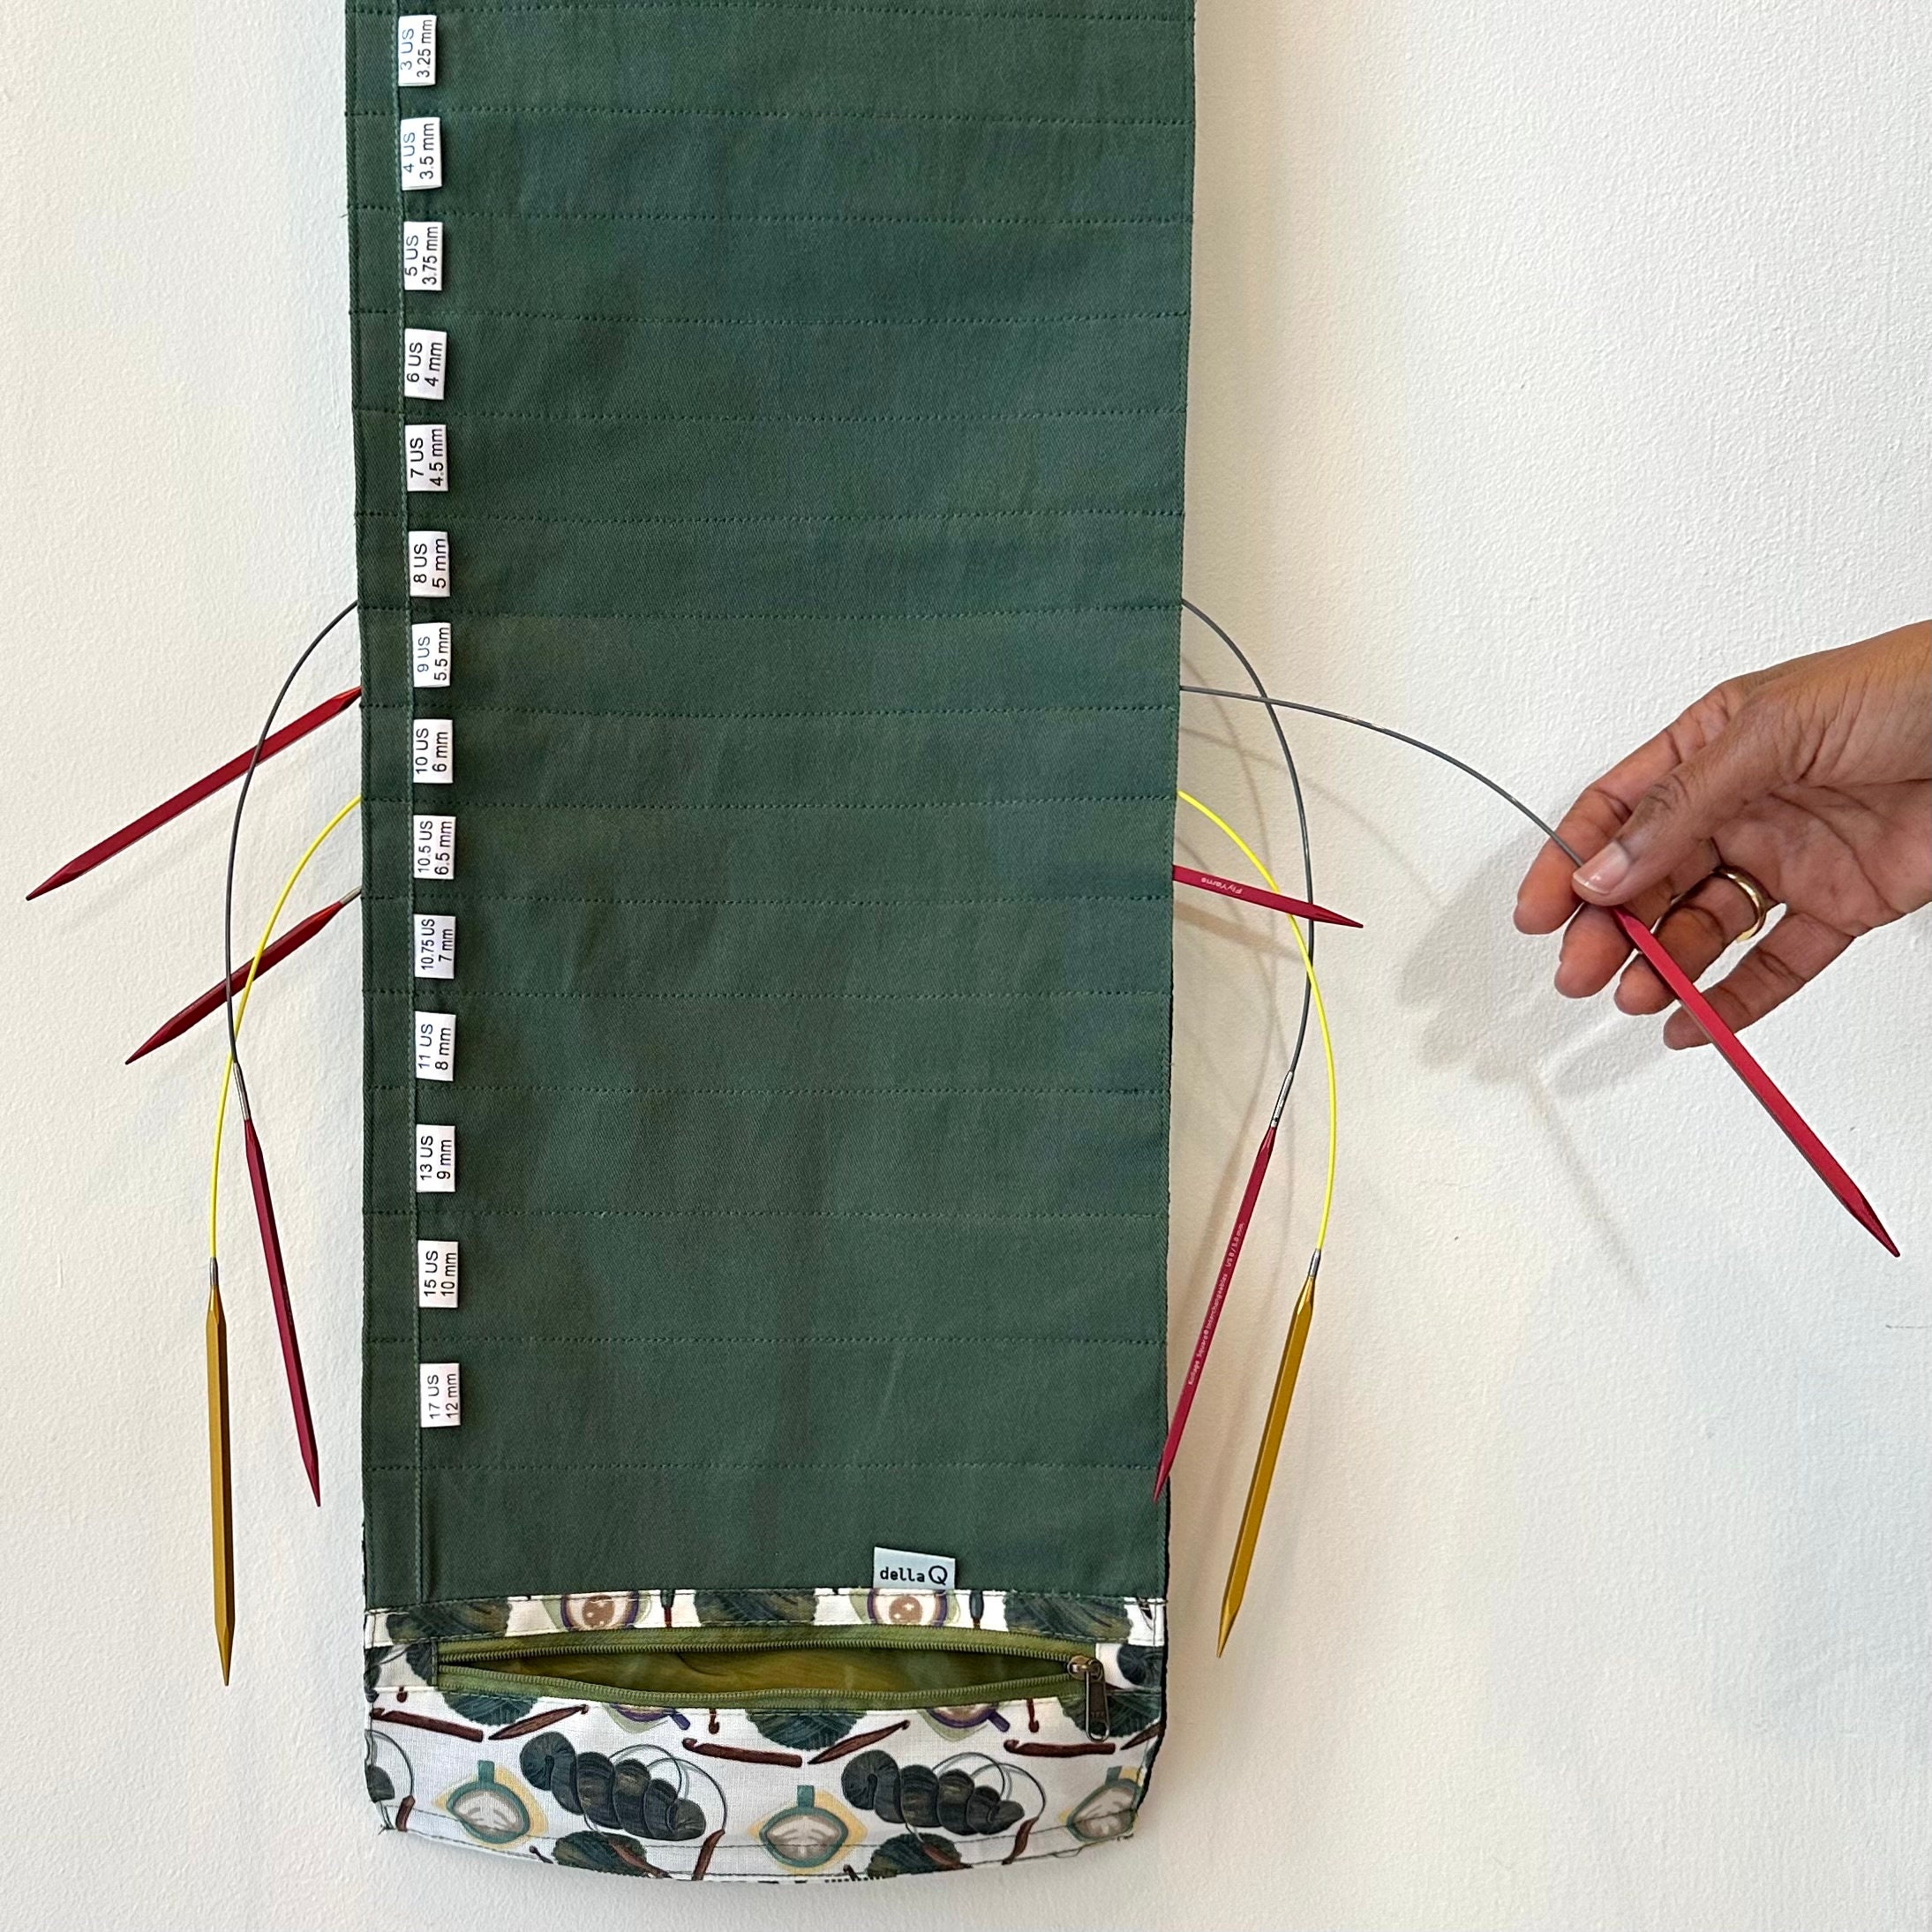 Circular Knitting Needle Storage With a Zipper Pocket: Circular